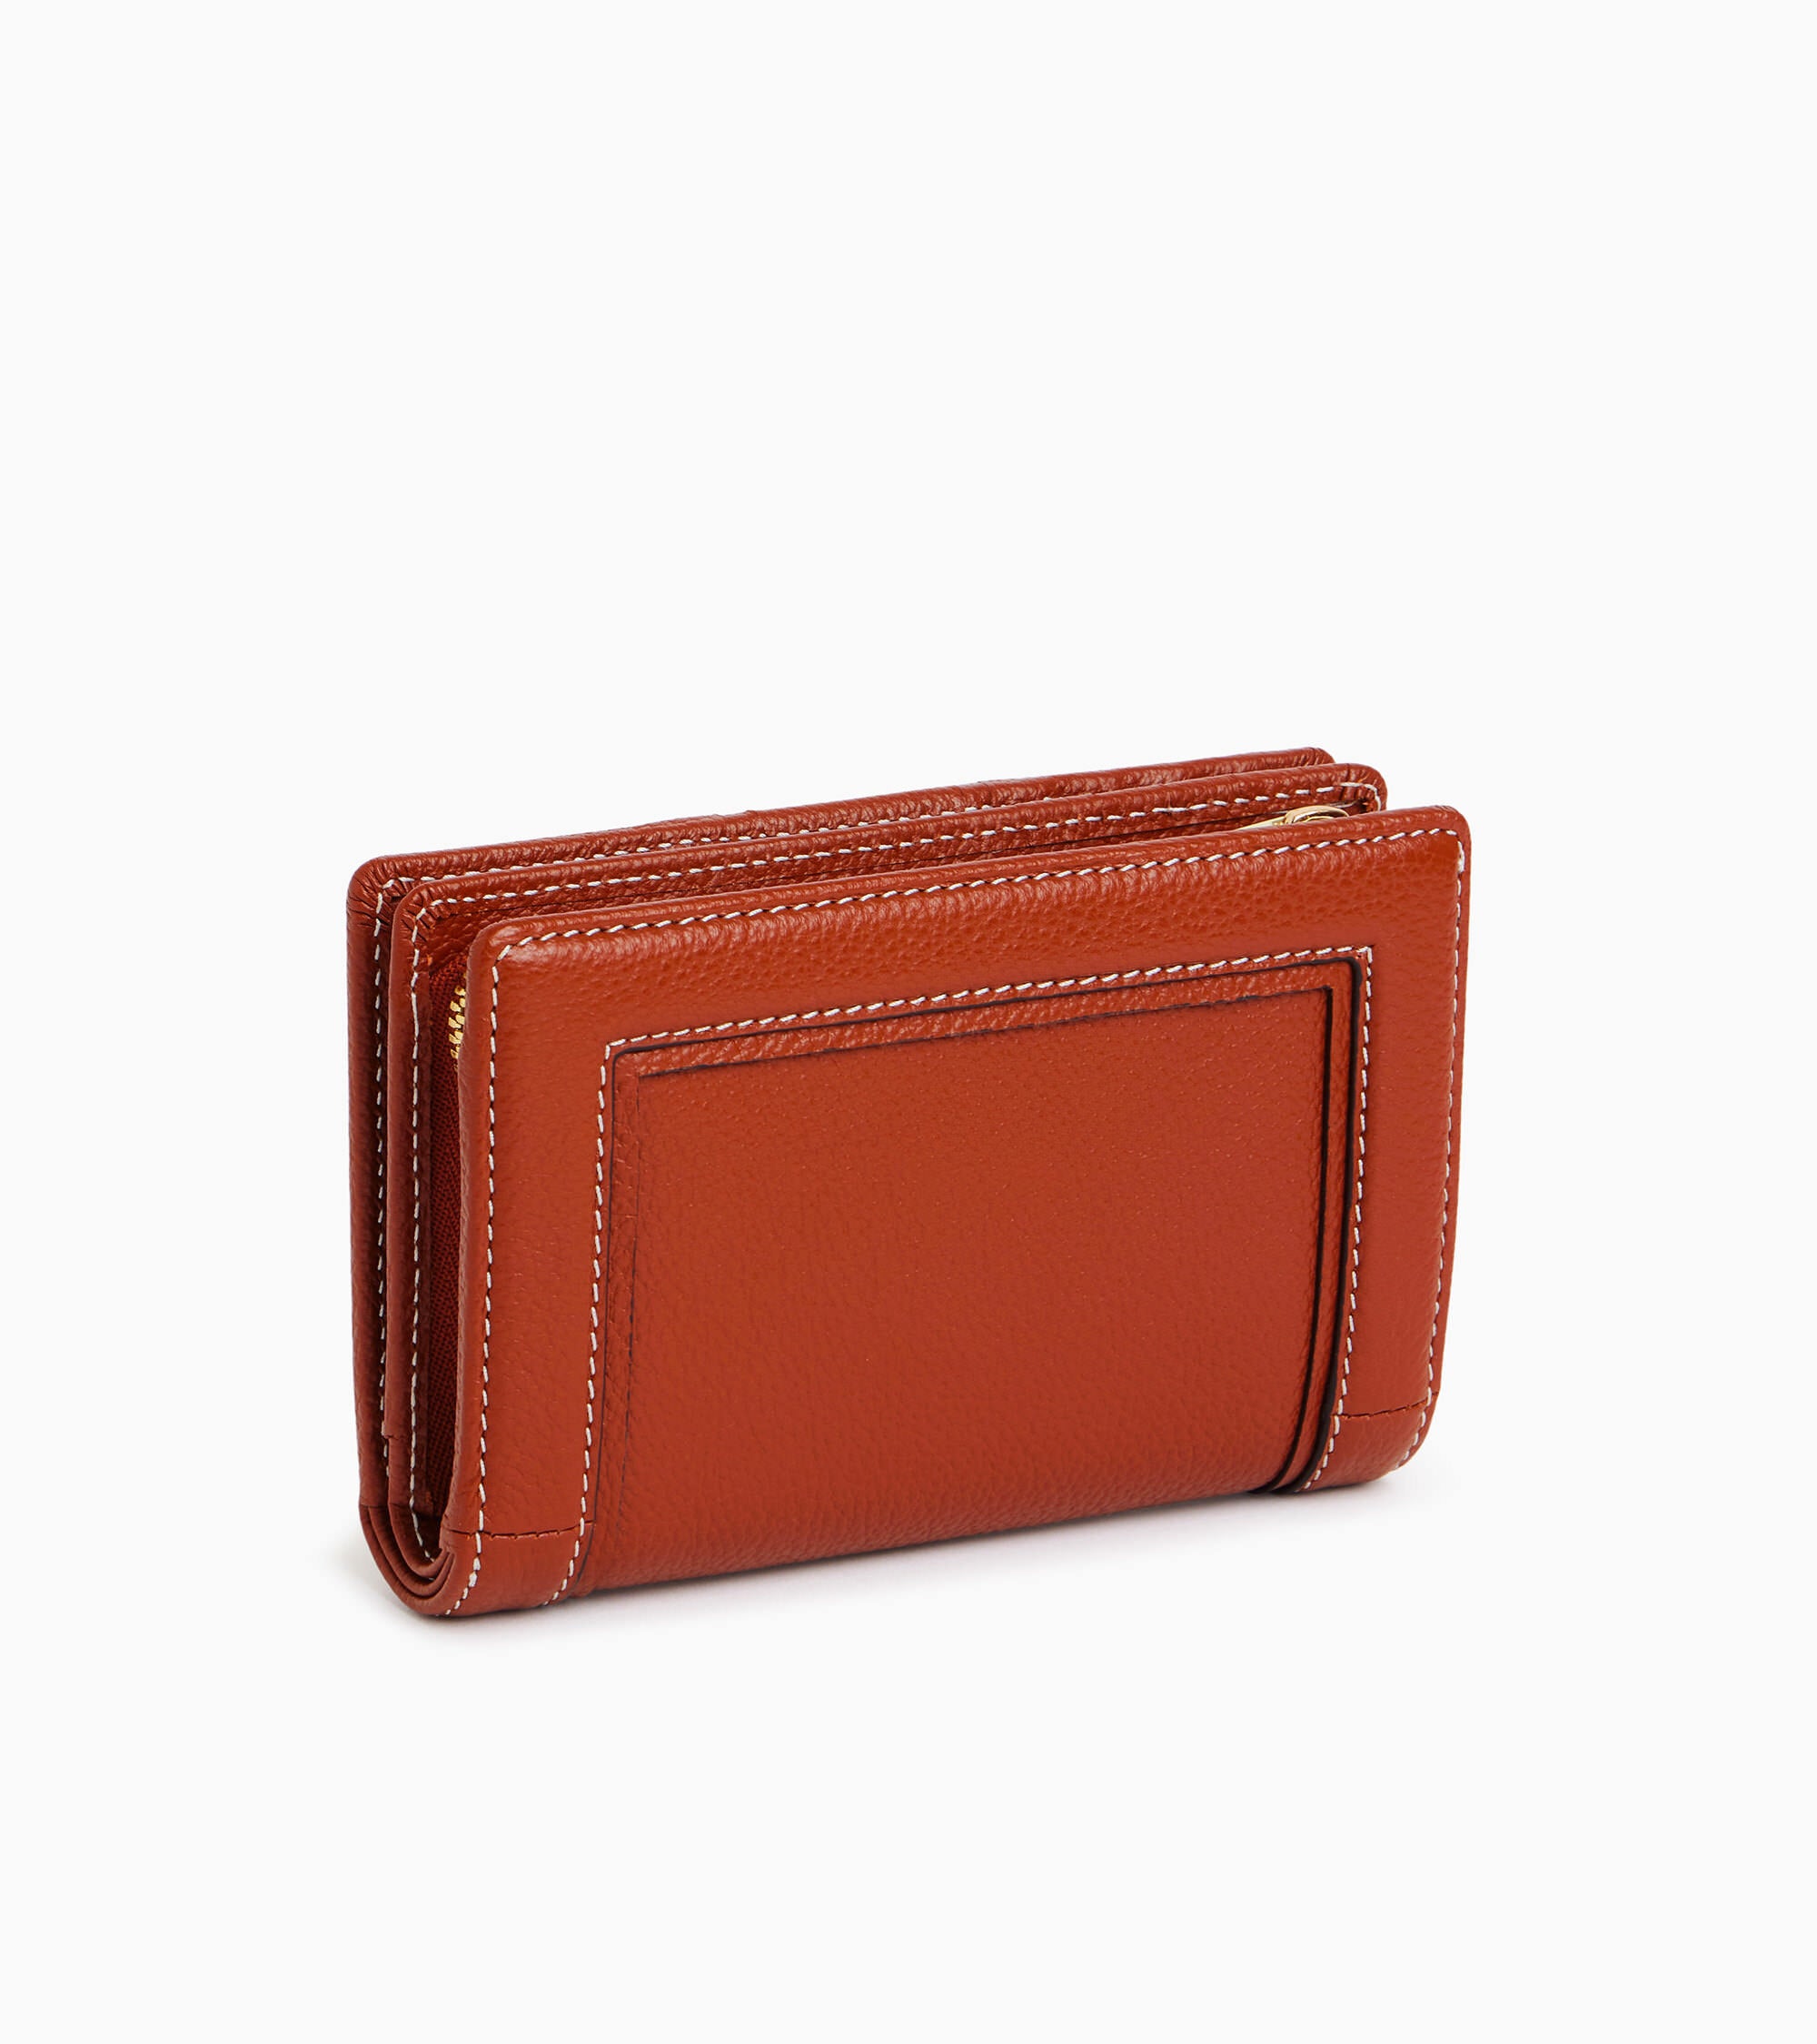 Ella medium wallet in grained leather